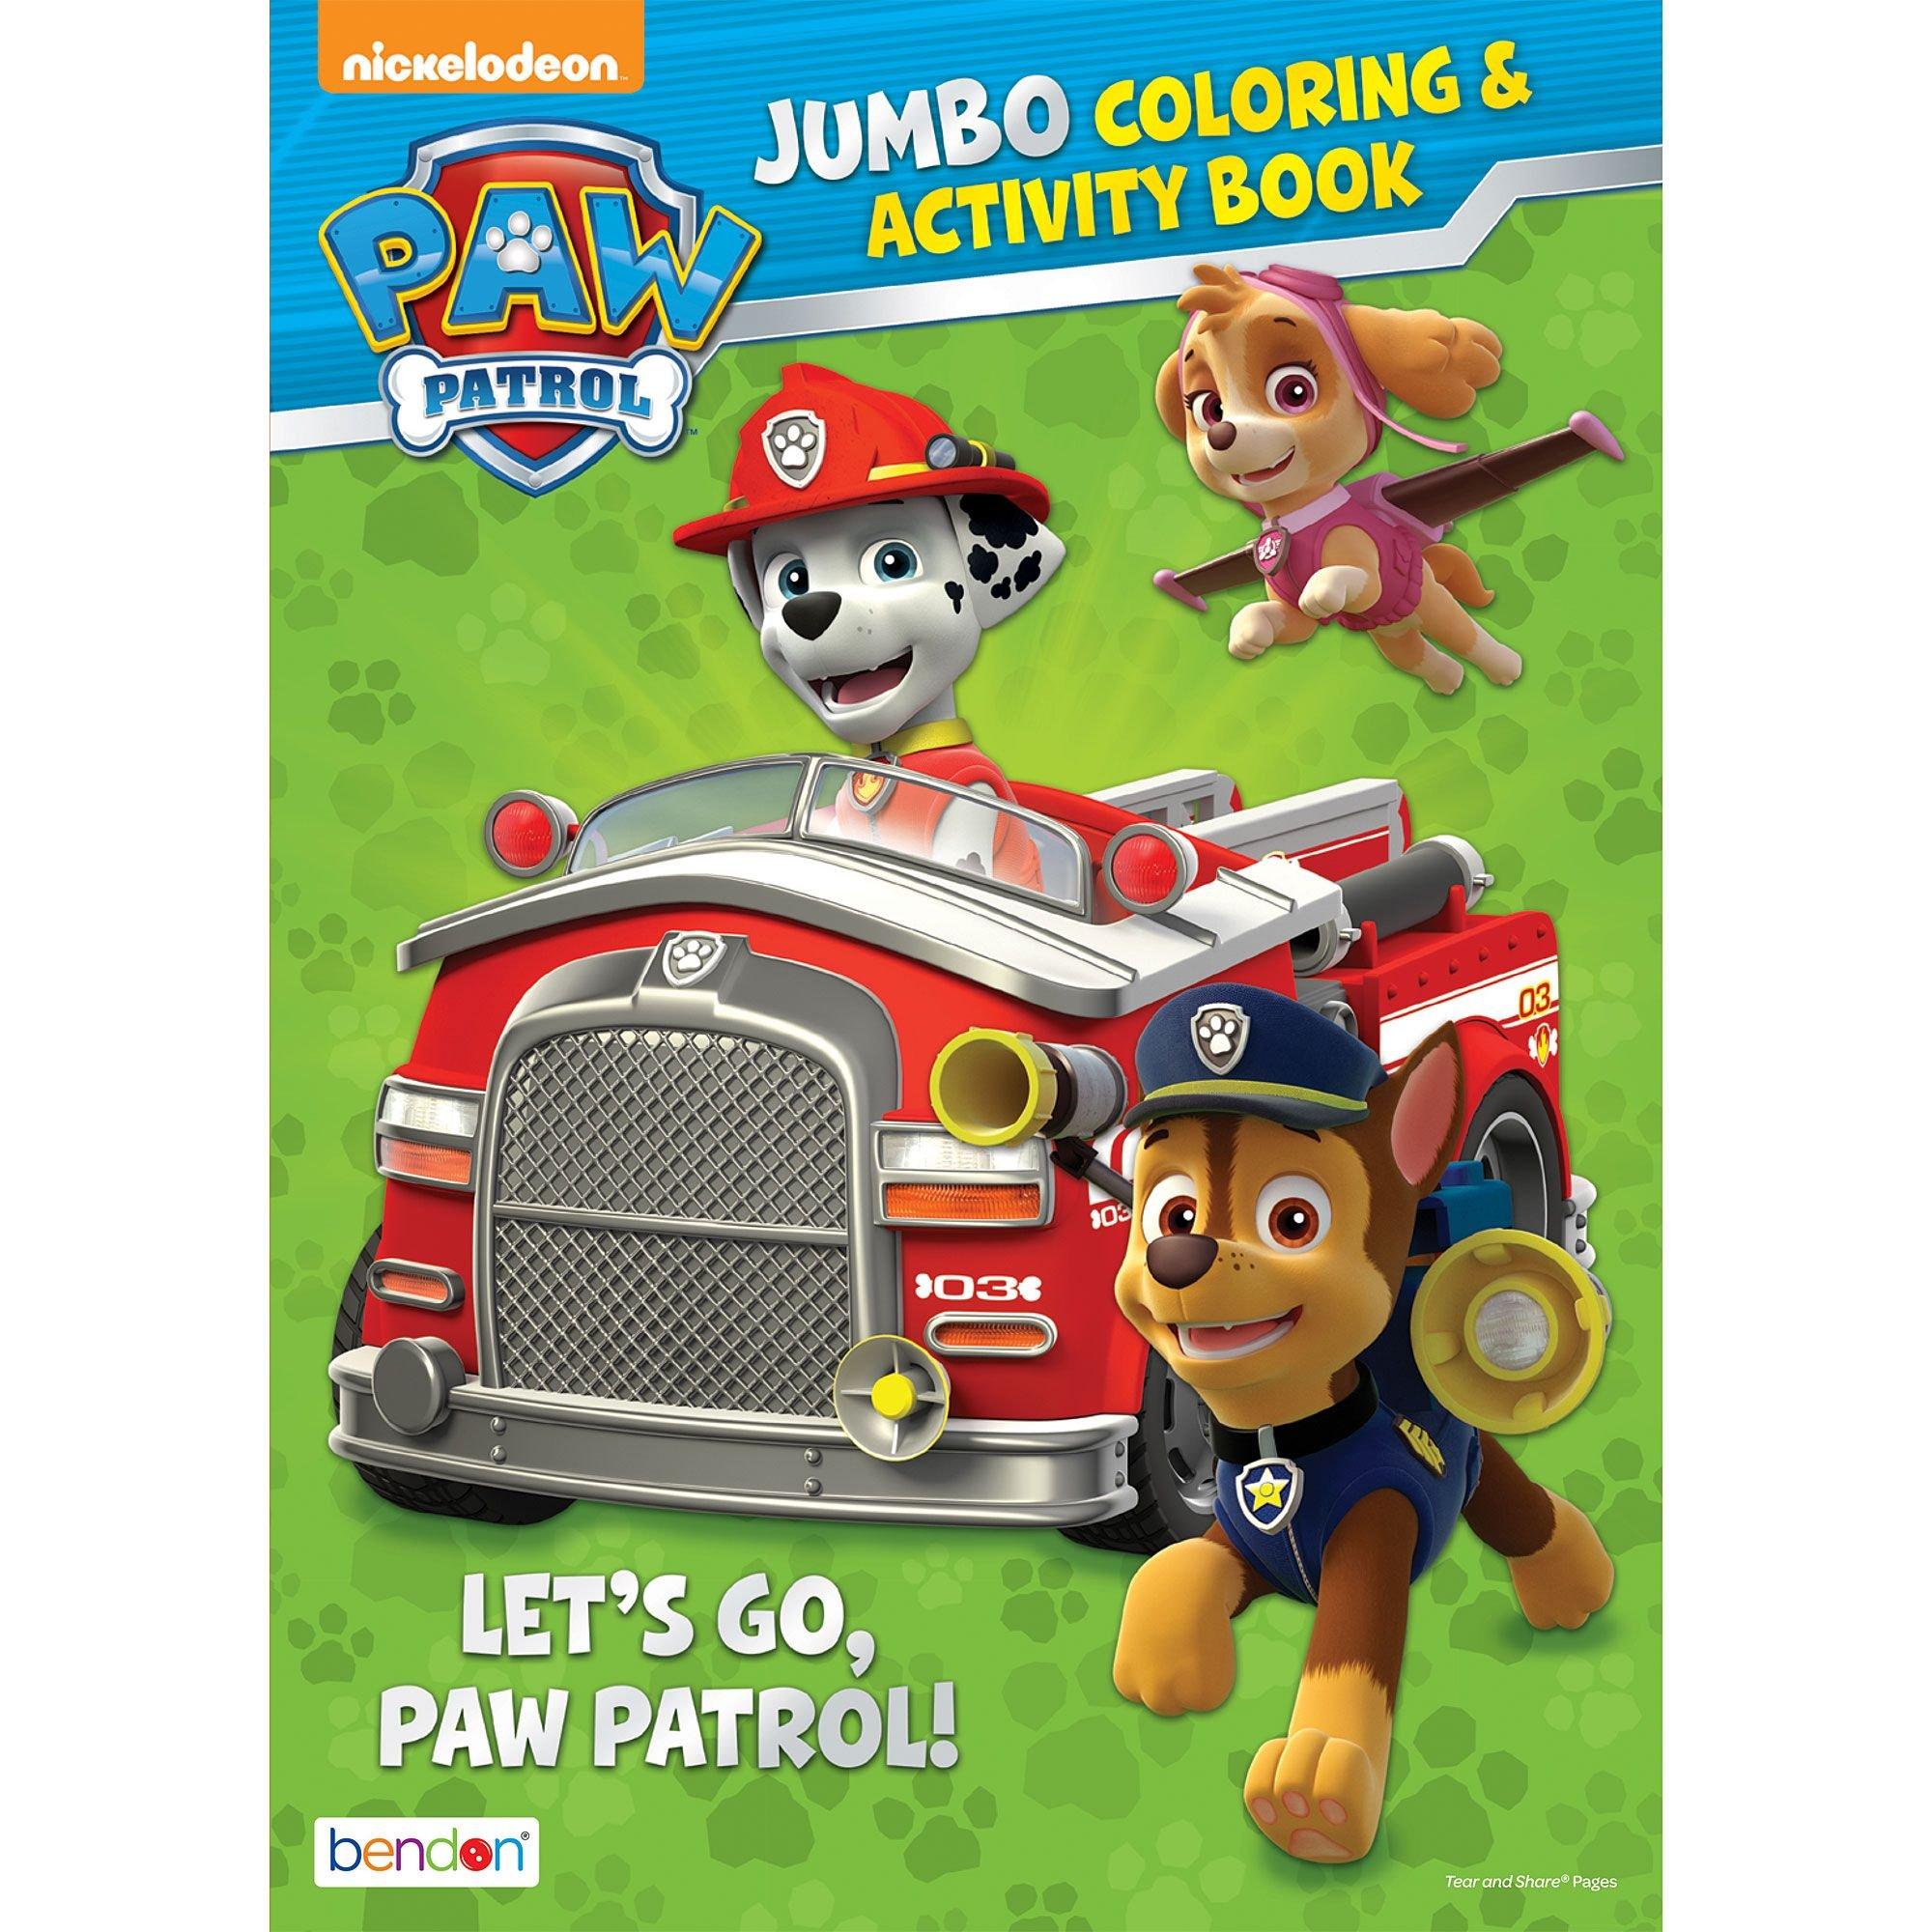 Paw Patrol Jumbo Coloring & Activity Book